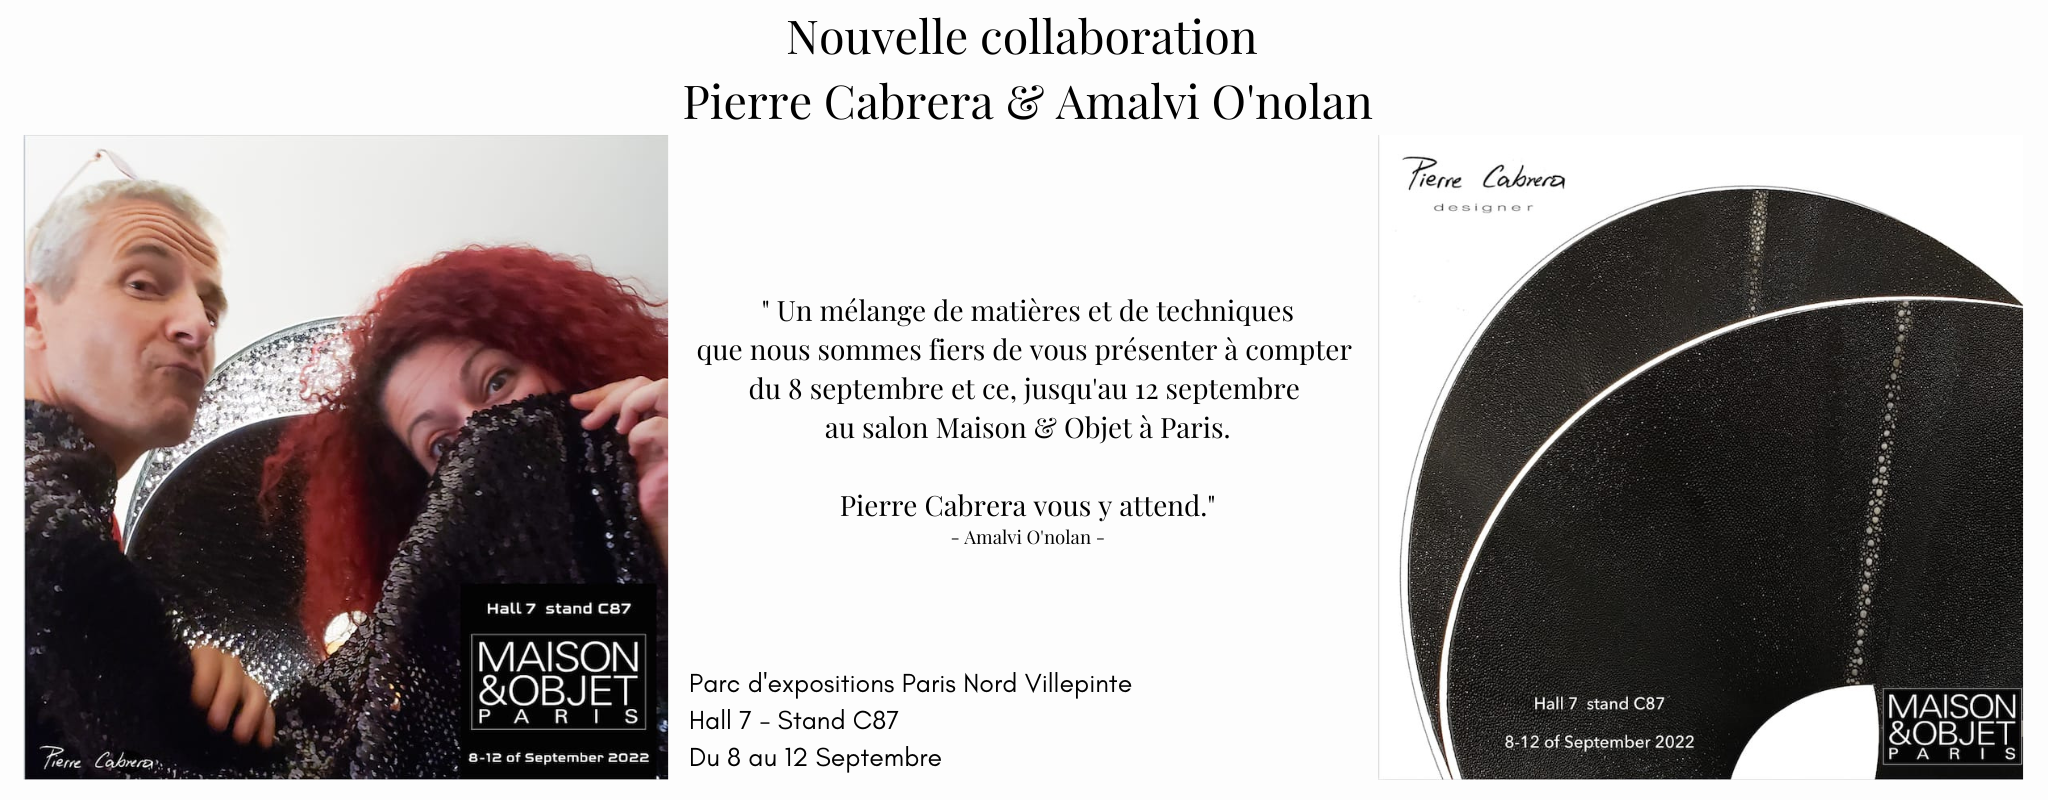 Pierre-Cabrera-Amalvi-Onolan-Collaboration-Maison-et-Objet-2022